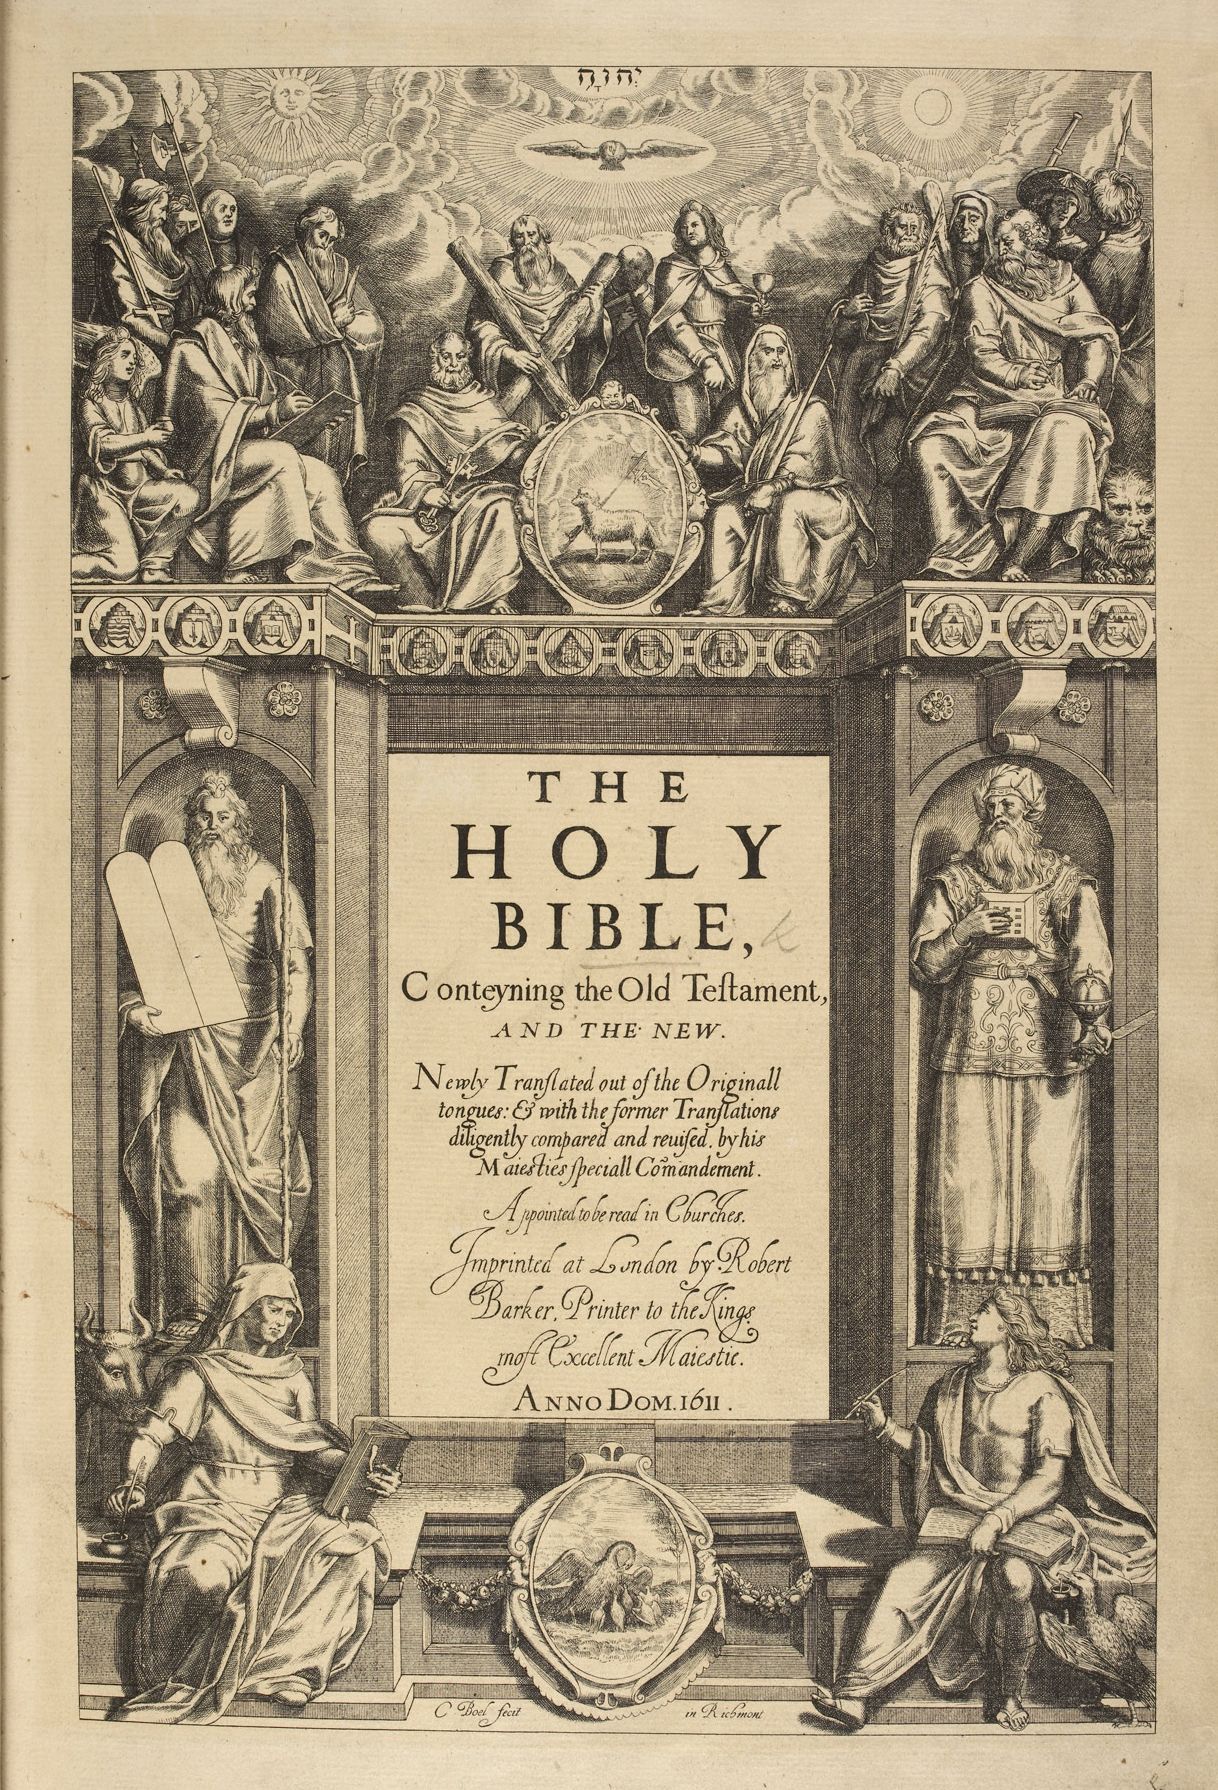 King James Bible, 1611. British Library